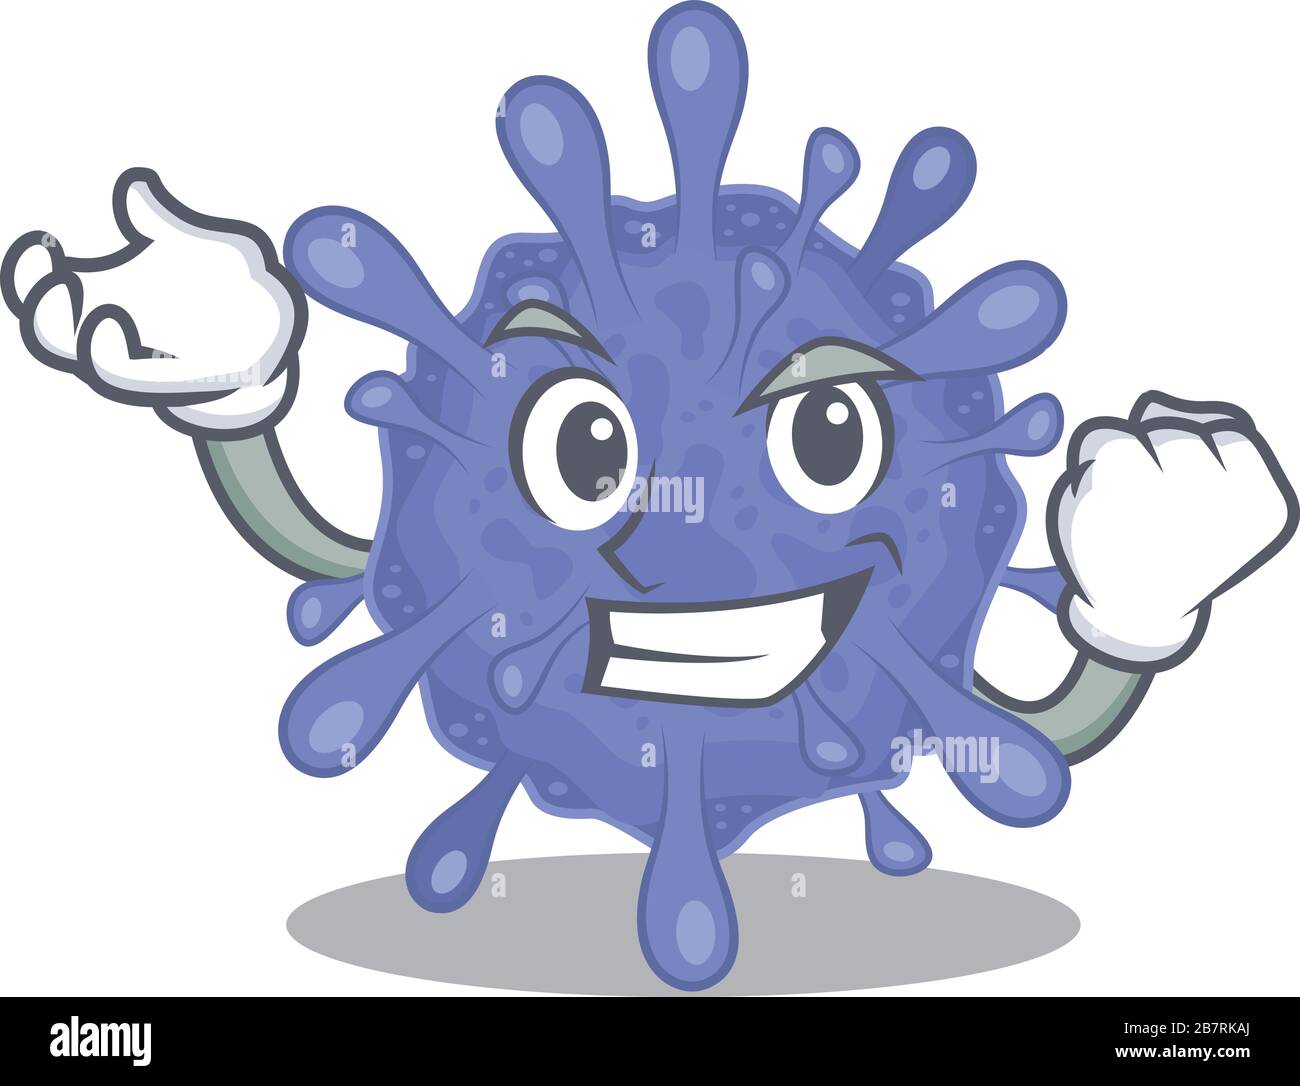 Biohazard viruscorona cartoon character style with happy face Stock Vector